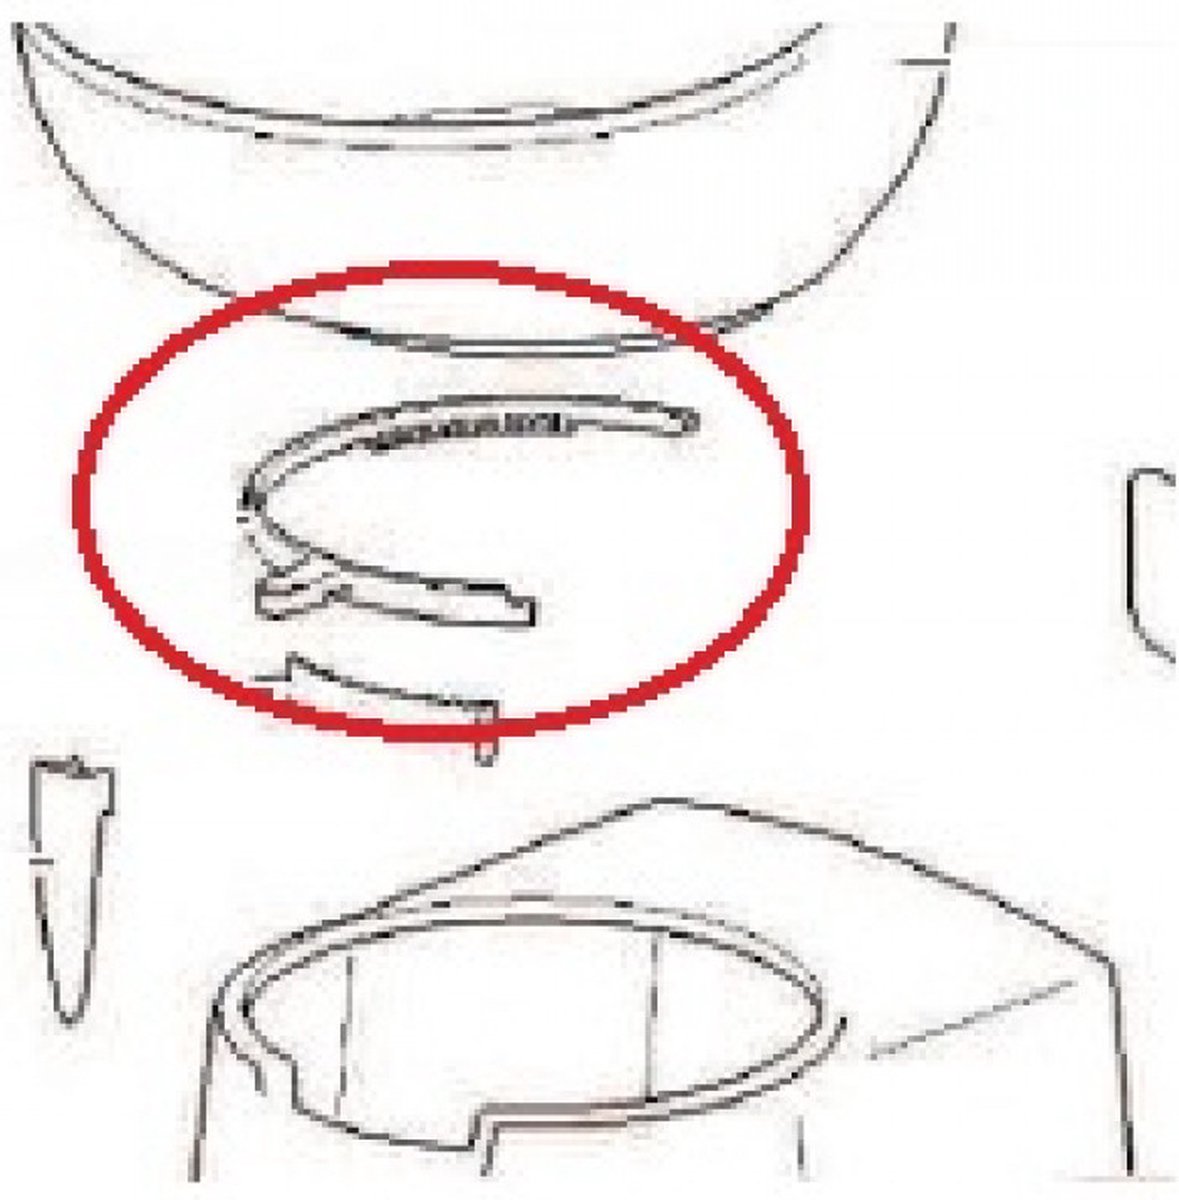 Ring blade mechanism